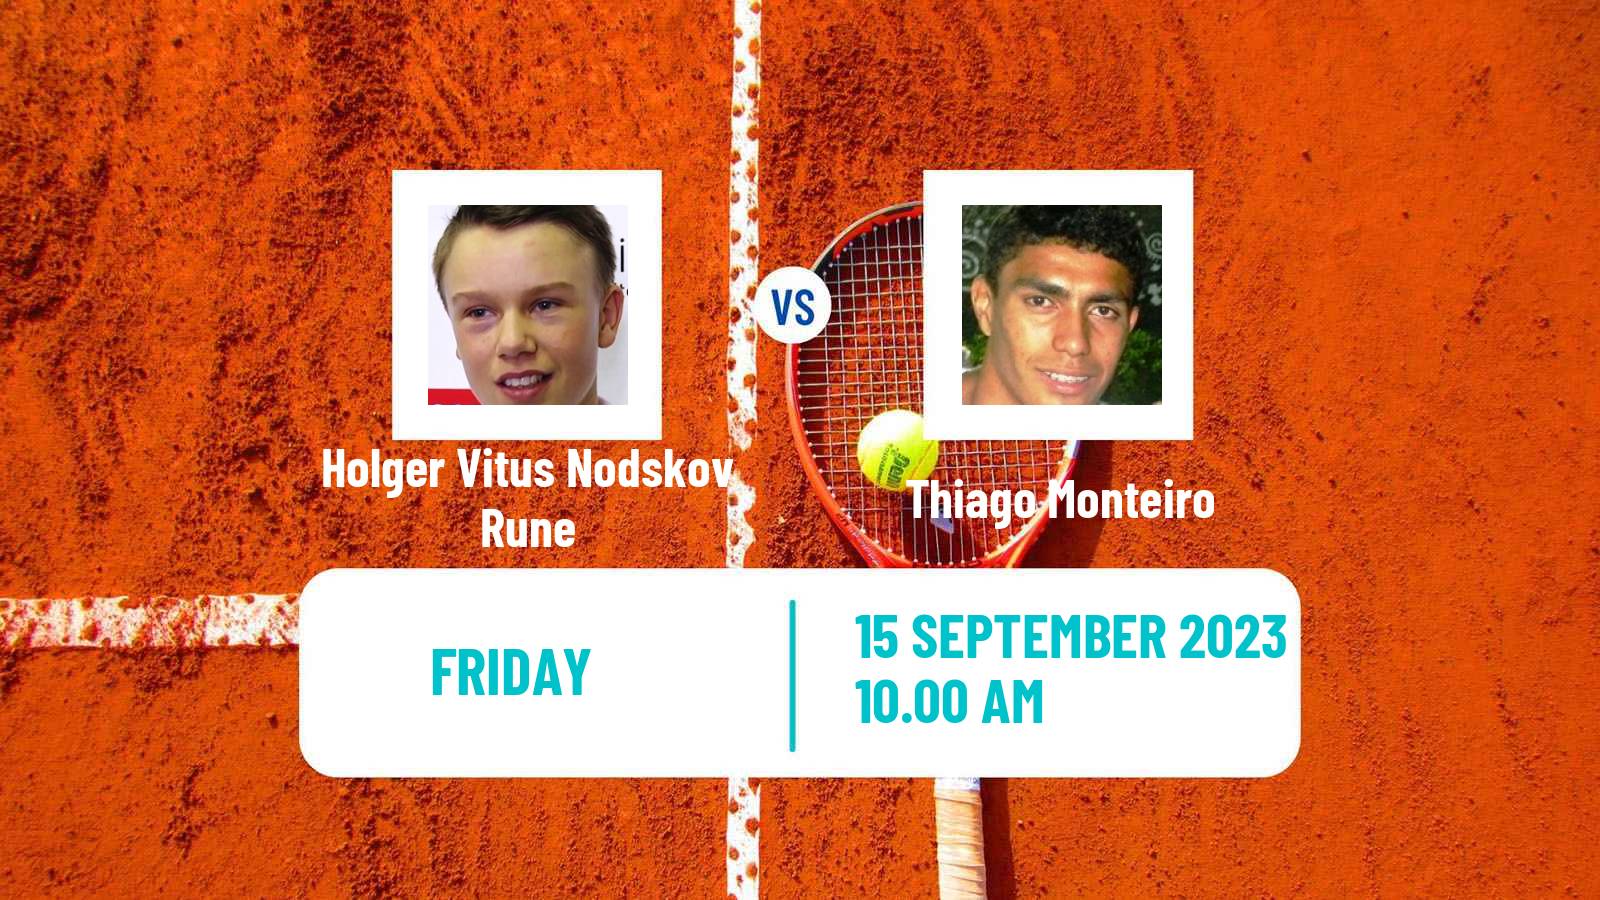 Tennis Davis Cup World Group I Holger Vitus Nodskov Rune - Thiago Monteiro